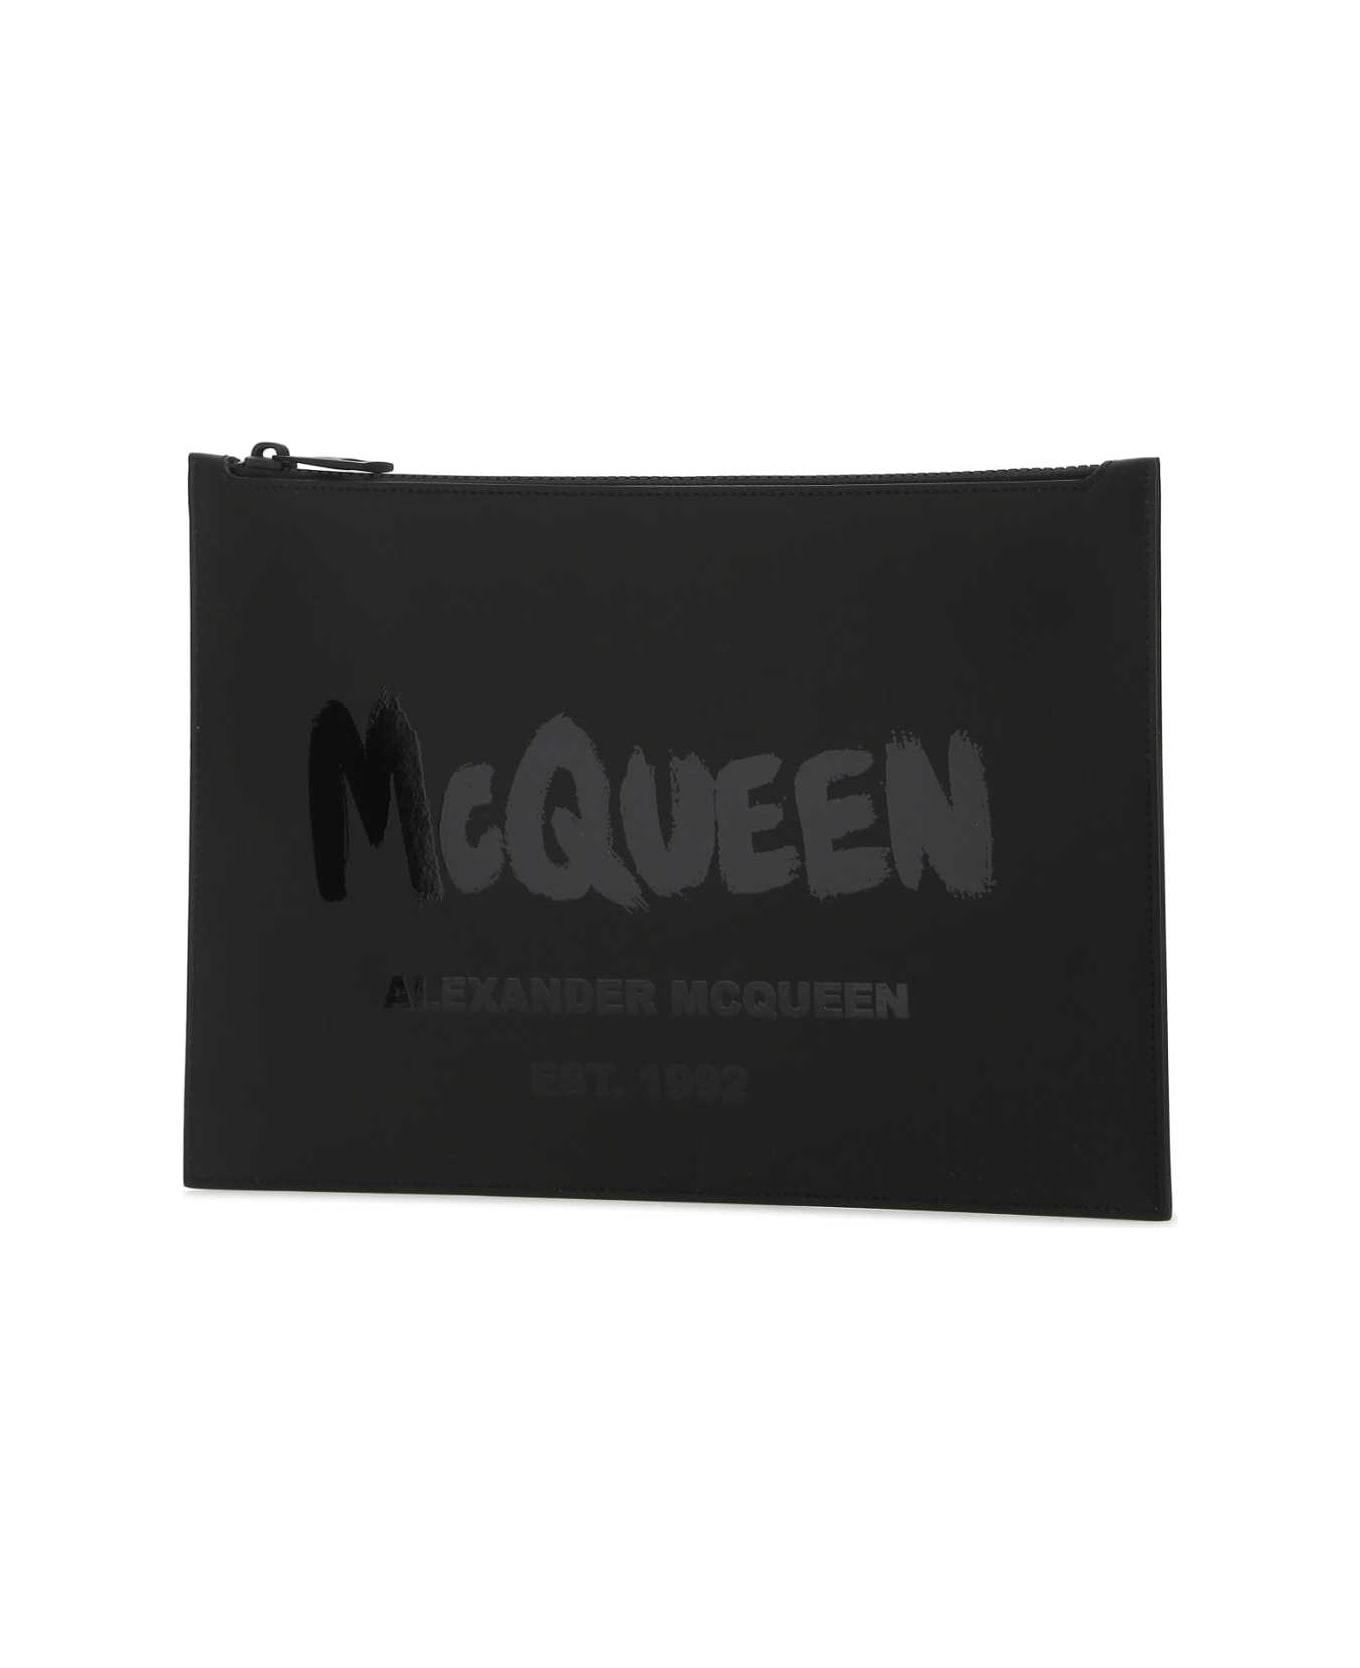 Alexander McQueen Black Leather Clutch - 1000